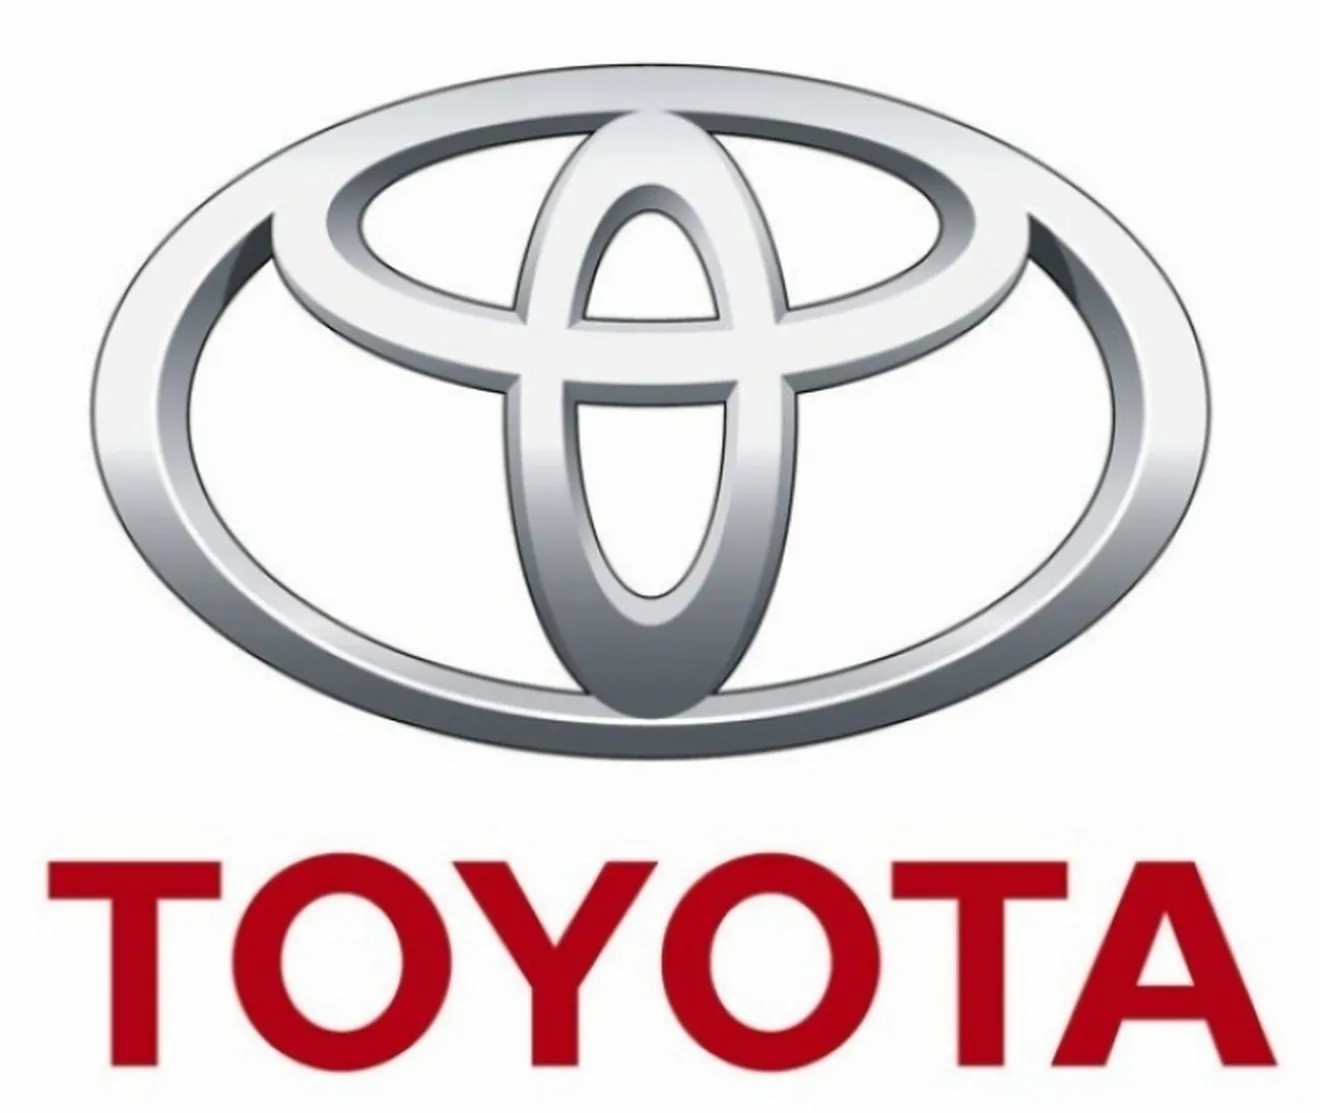 Las futuras ideas de Toyota saldrán de Bilbao